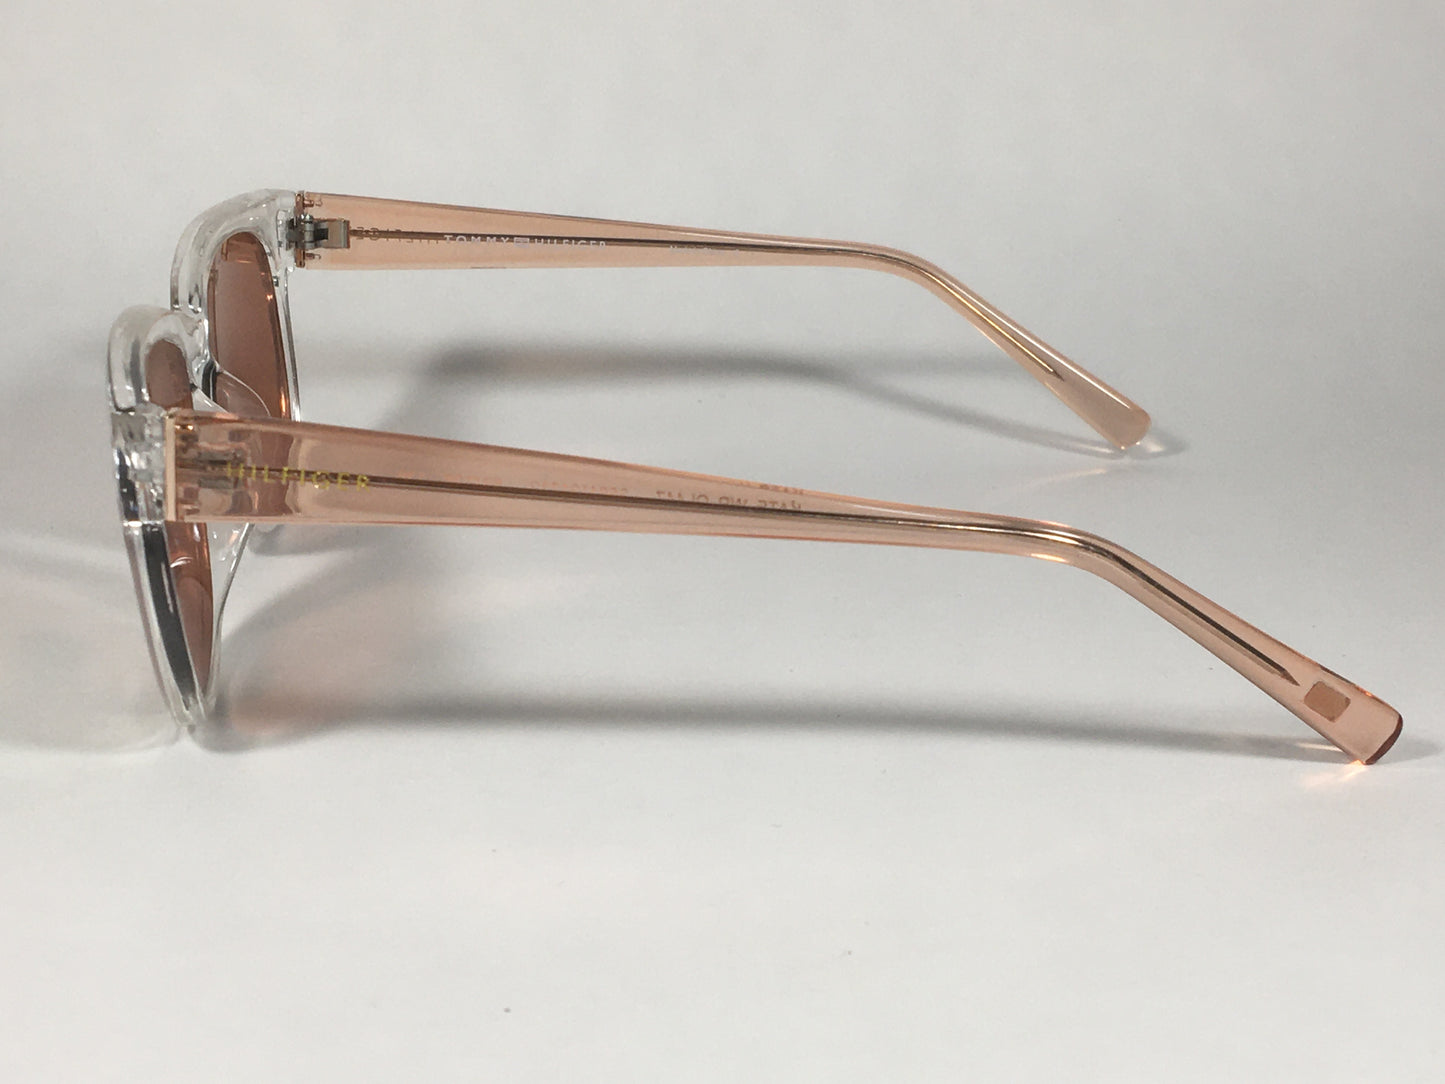 Tommy Hilfiger Kate Square Sunglasses Pink Crystal Rose Gold Mirror Lens KATE WP OL447 - Sunglasses